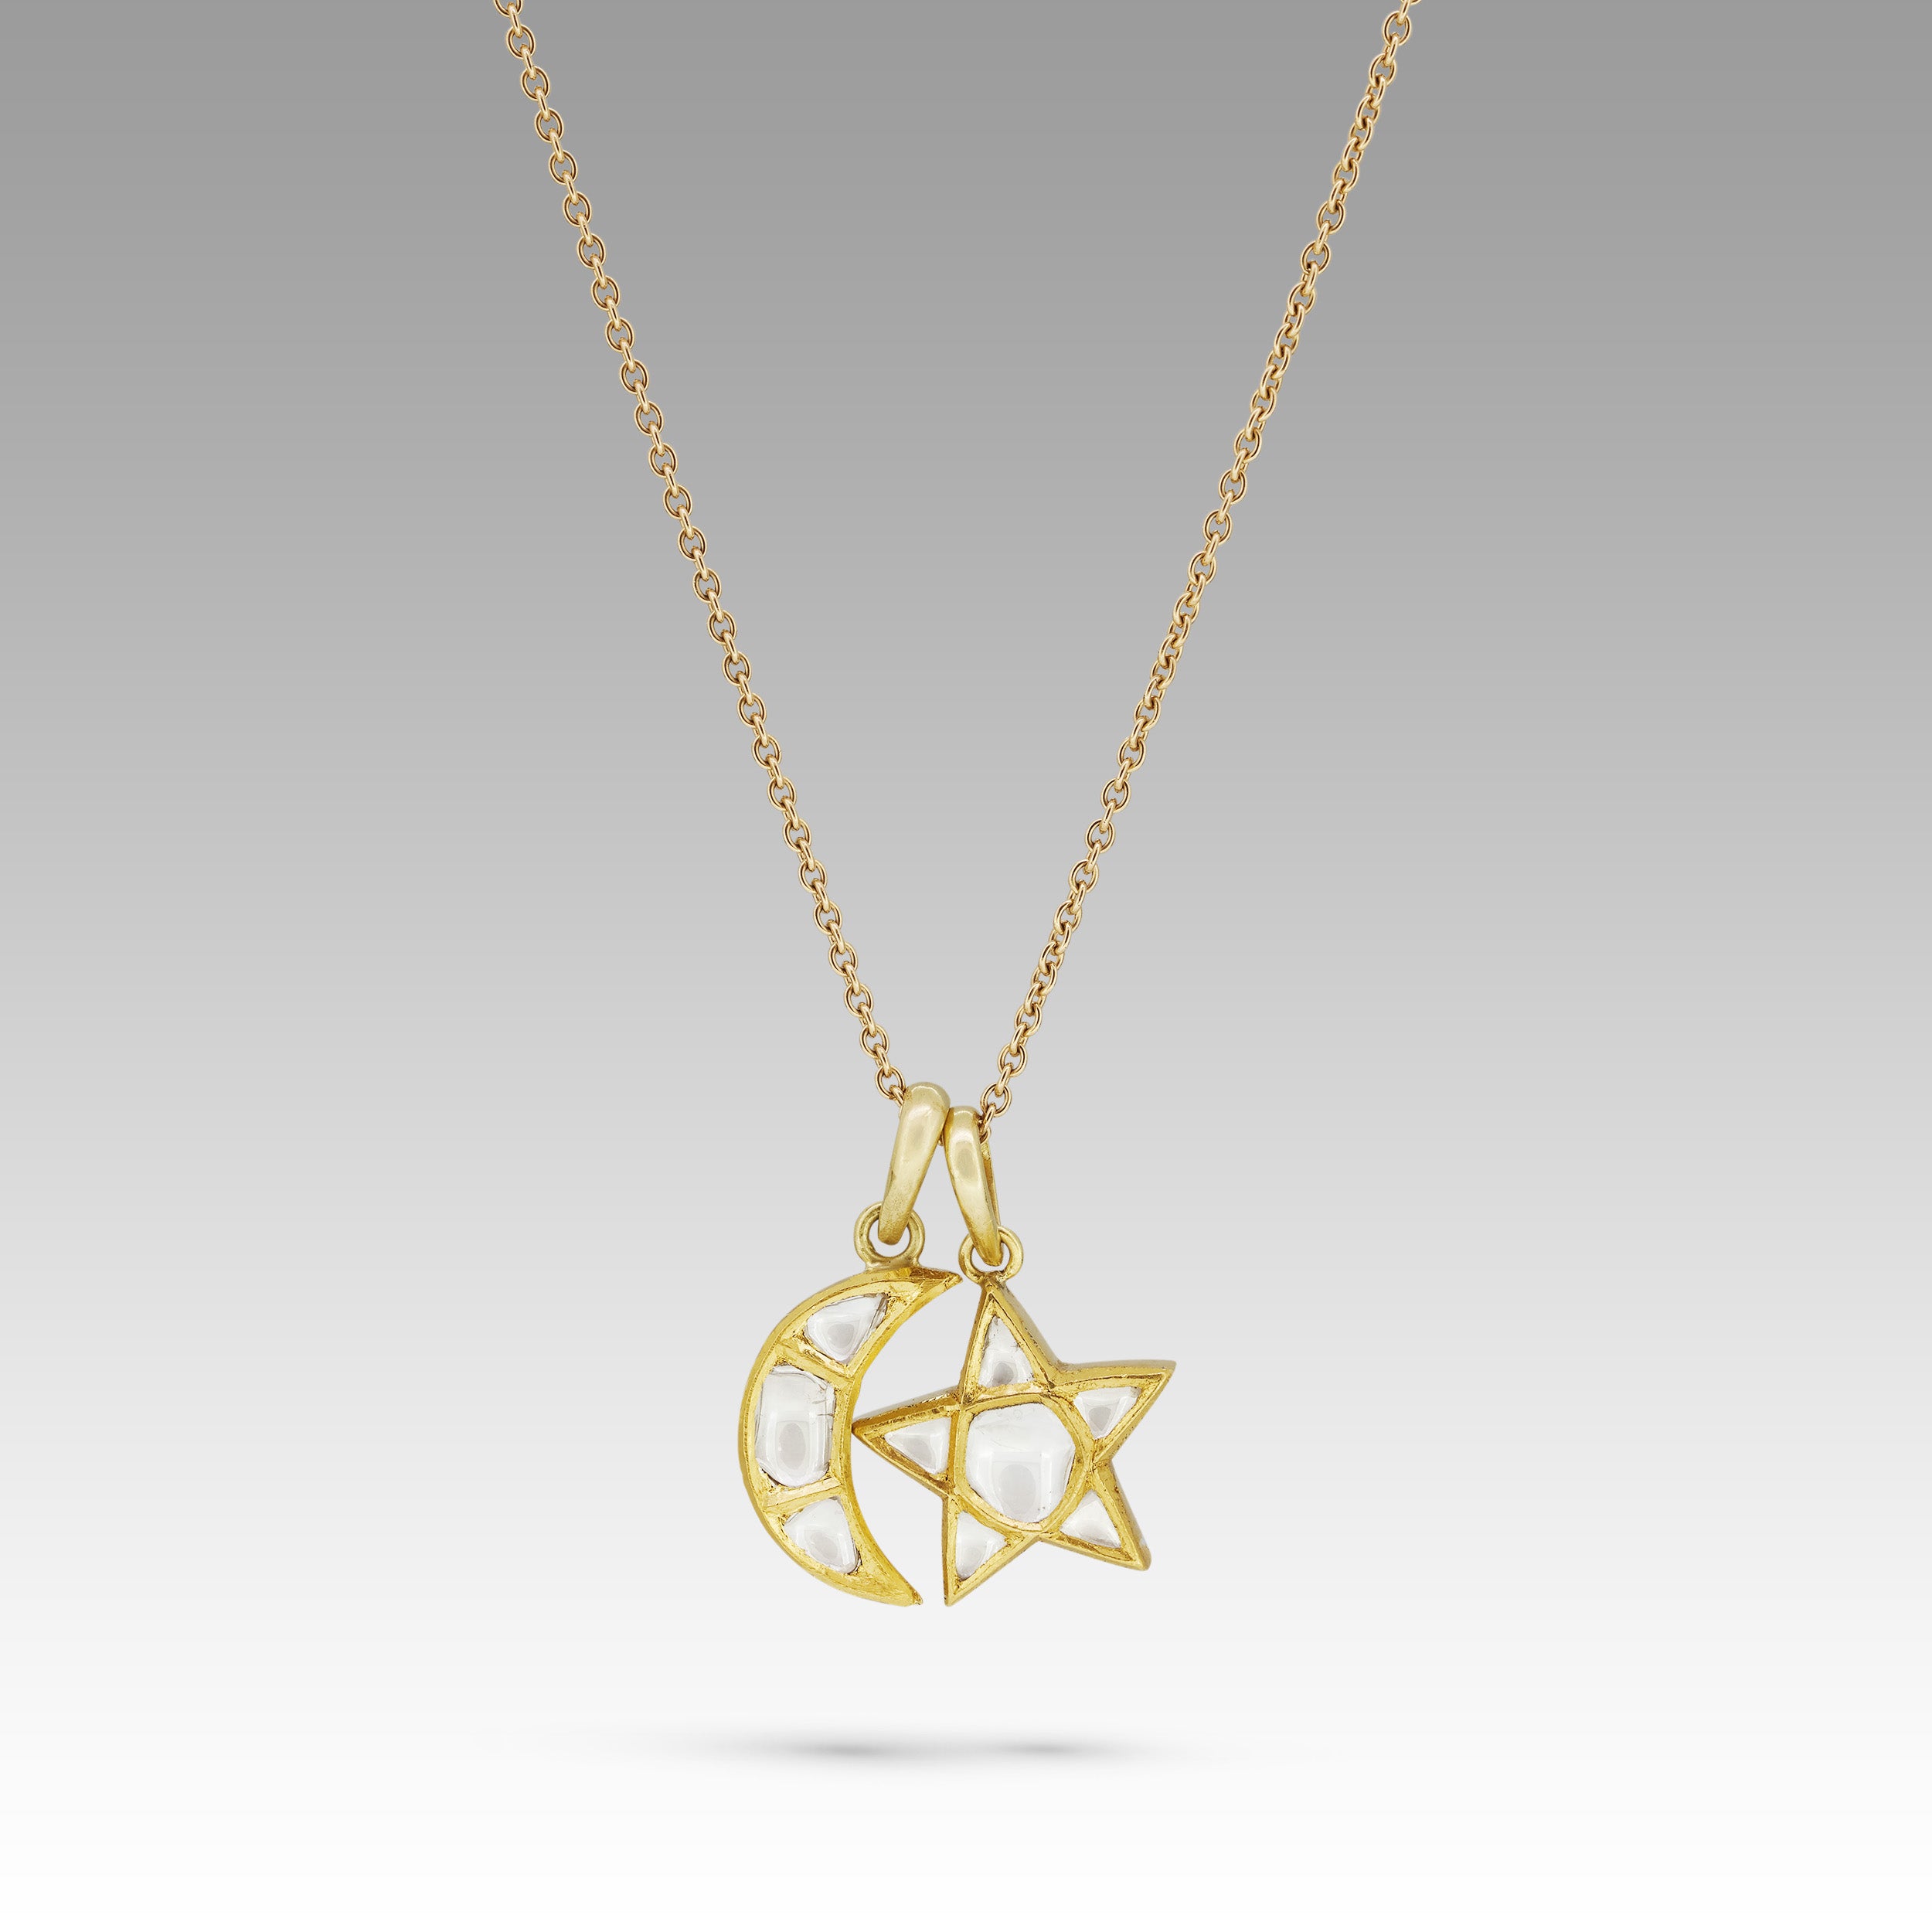 Hetre Alresford Hampshire Boutique Jewellery Sophie Theakston Polki Diamond Moon & Star Necklace 